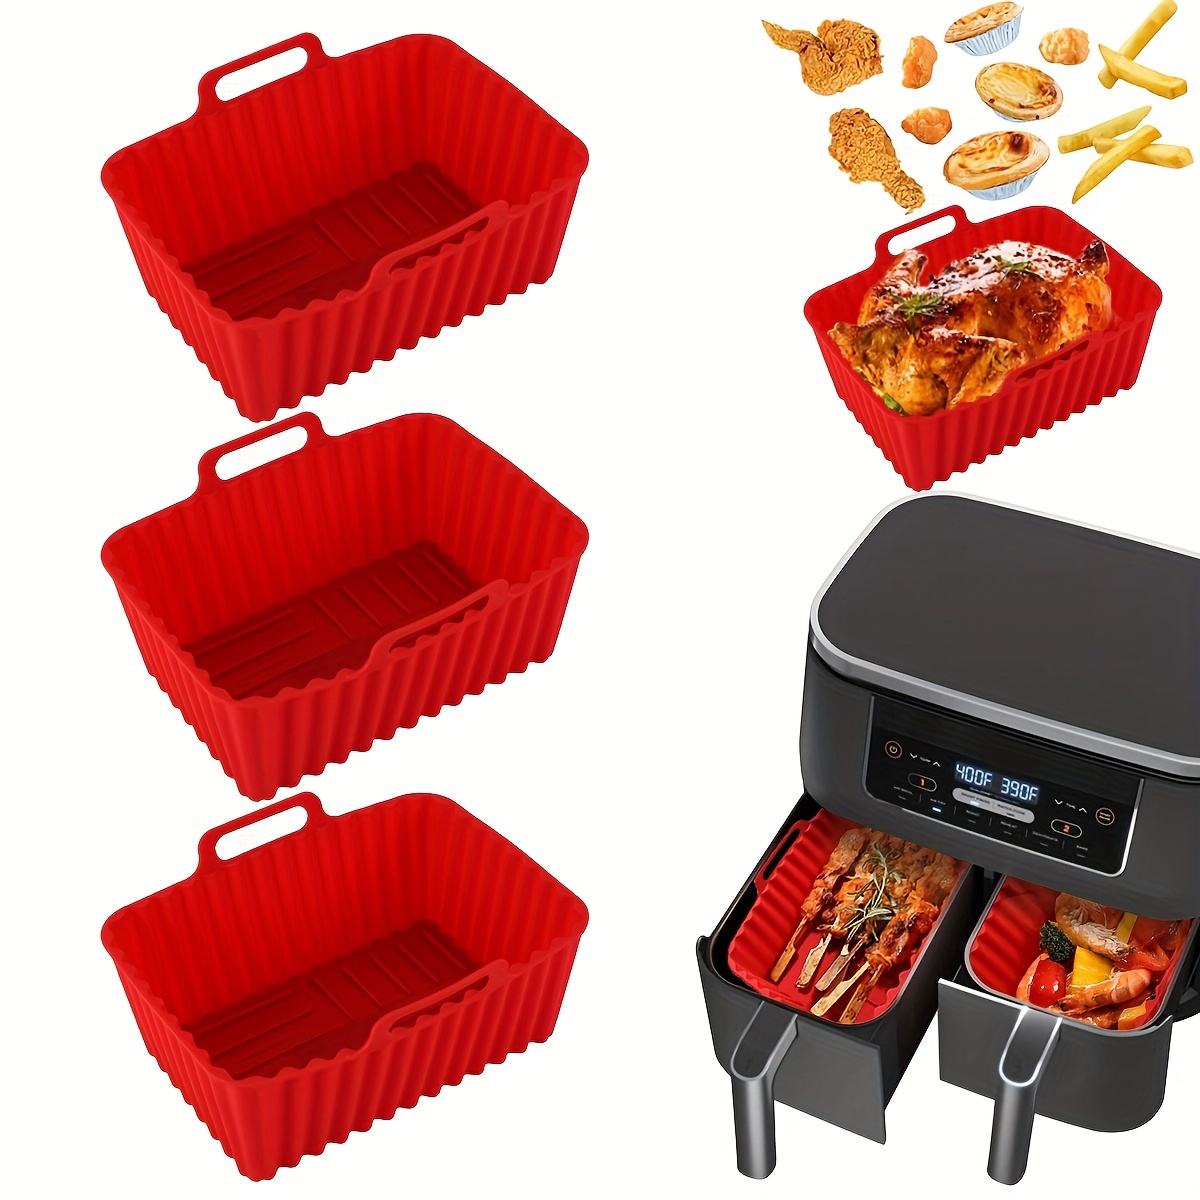 Replacement Air Fryer Basket for Ninja Foodi SP101 Air Fry Oven